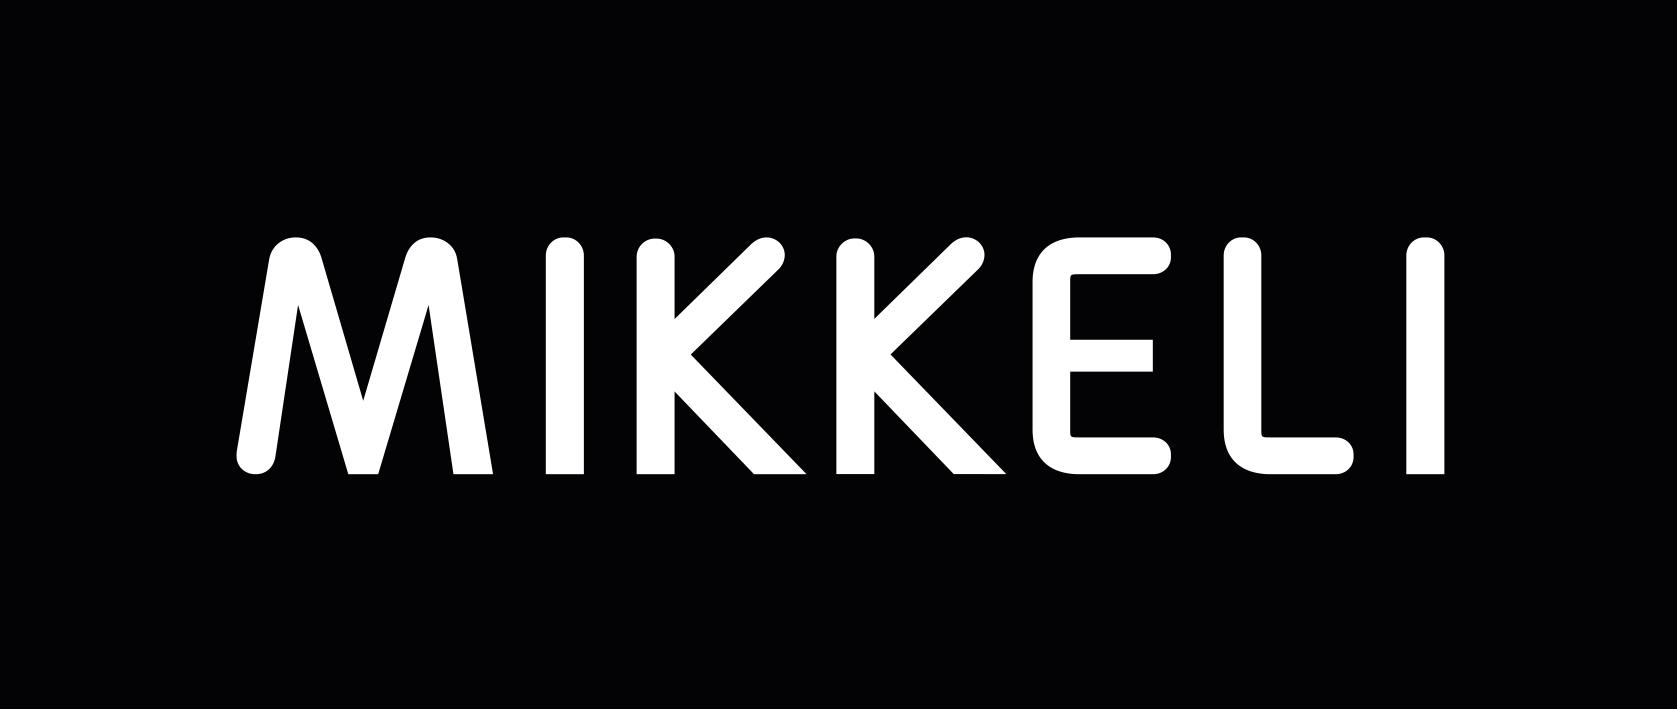 Mikkelin kaupungin logo